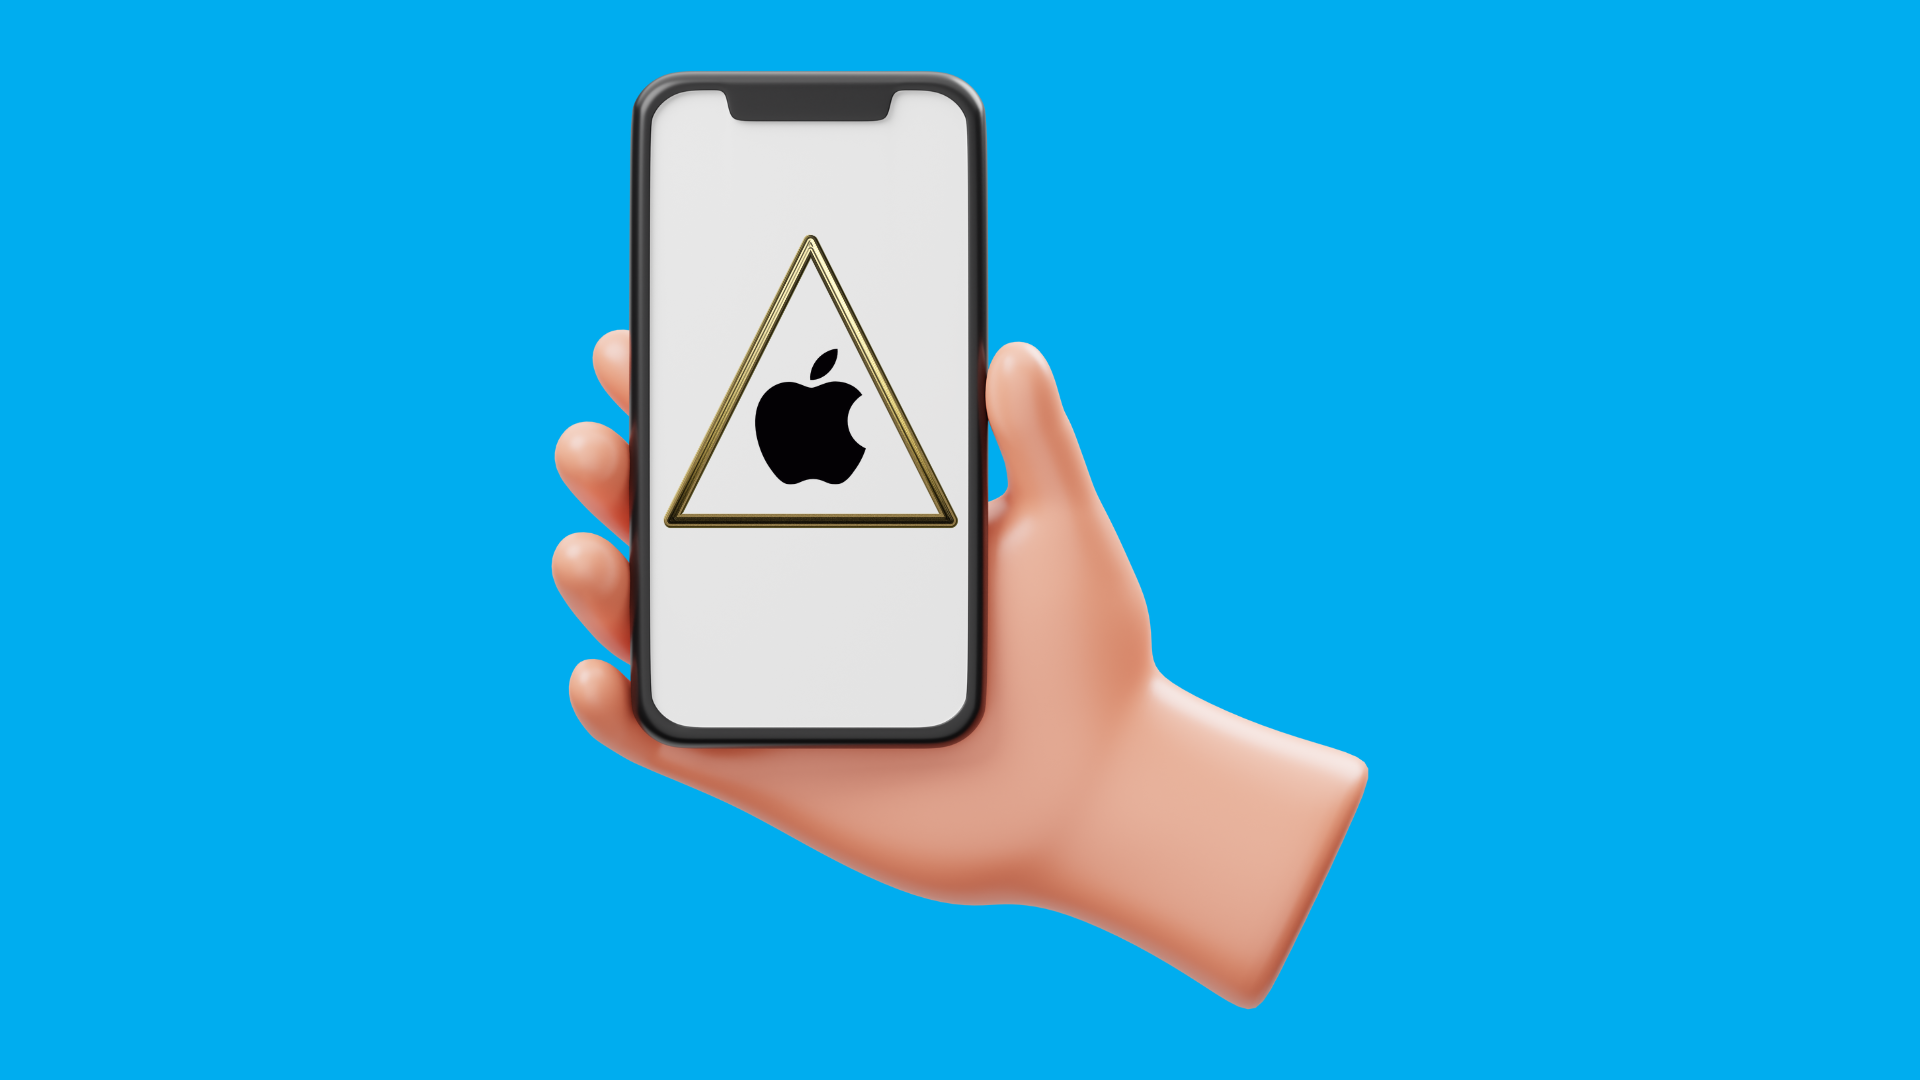 iPhone Triangulation Attack: Características ocultas del Hardware